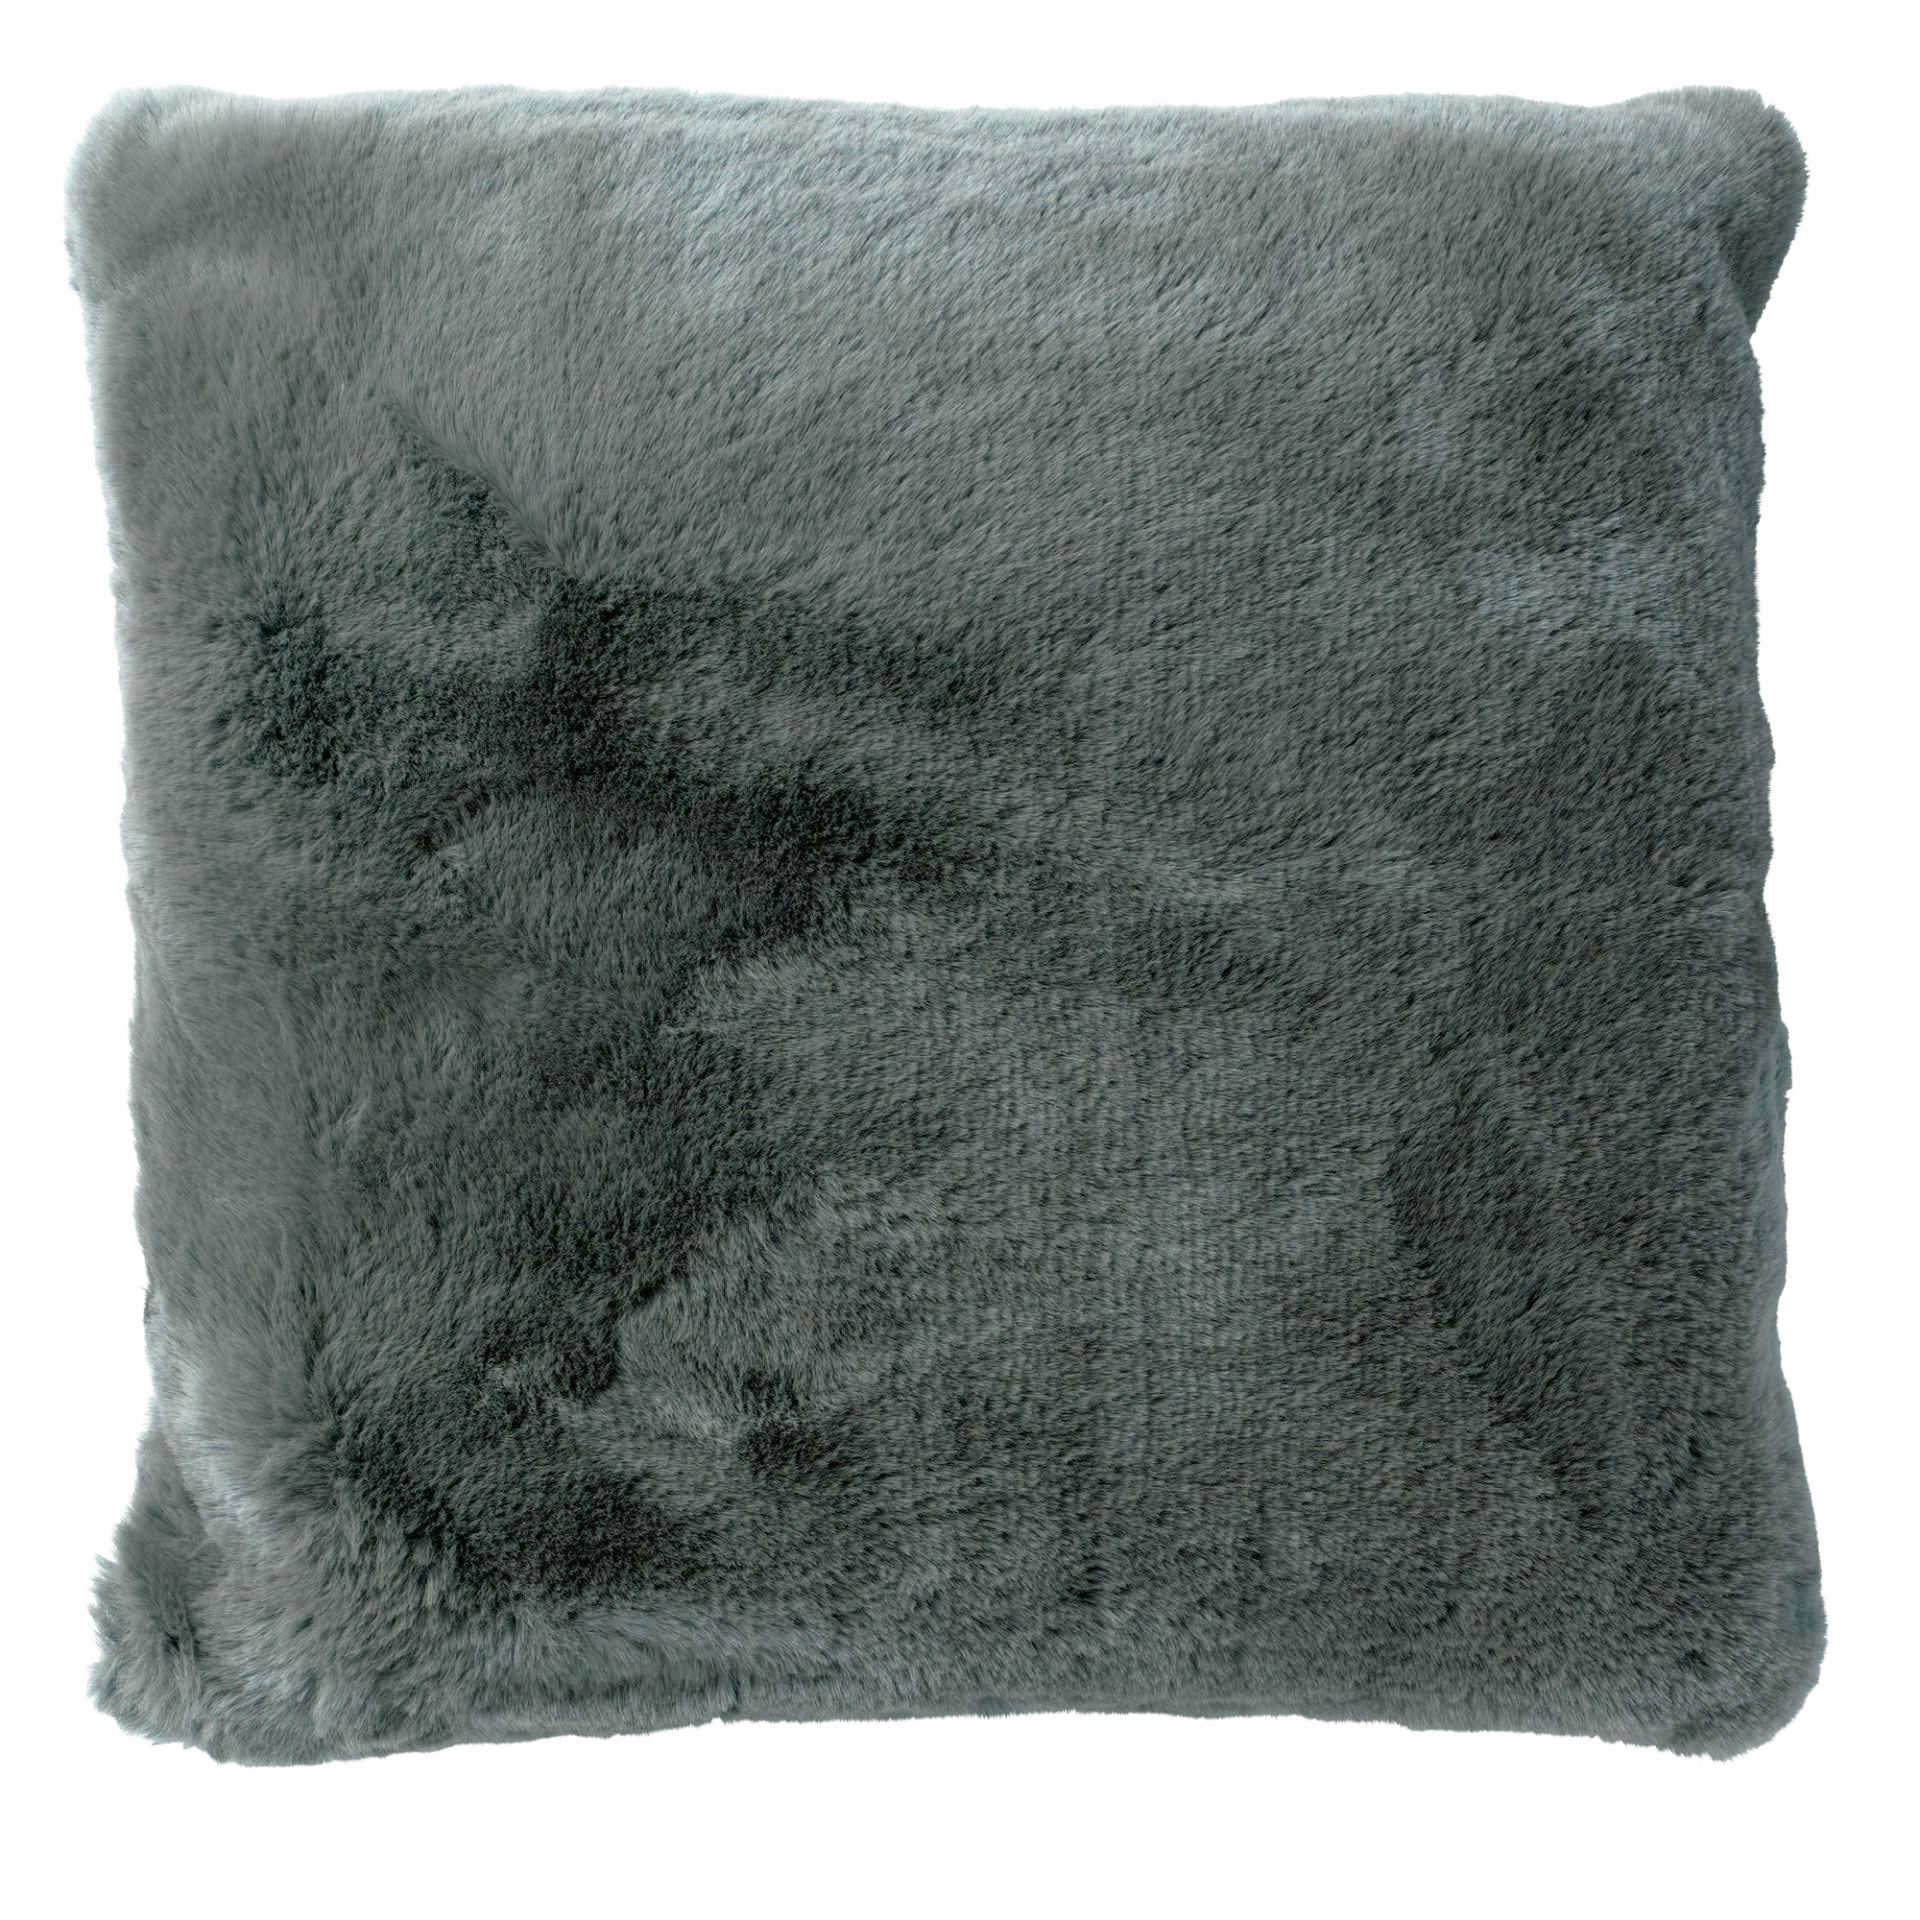 ZAYA - Kussenhoes unikleur 45x45 cm - Charcoal Gray - antraciet - superzacht